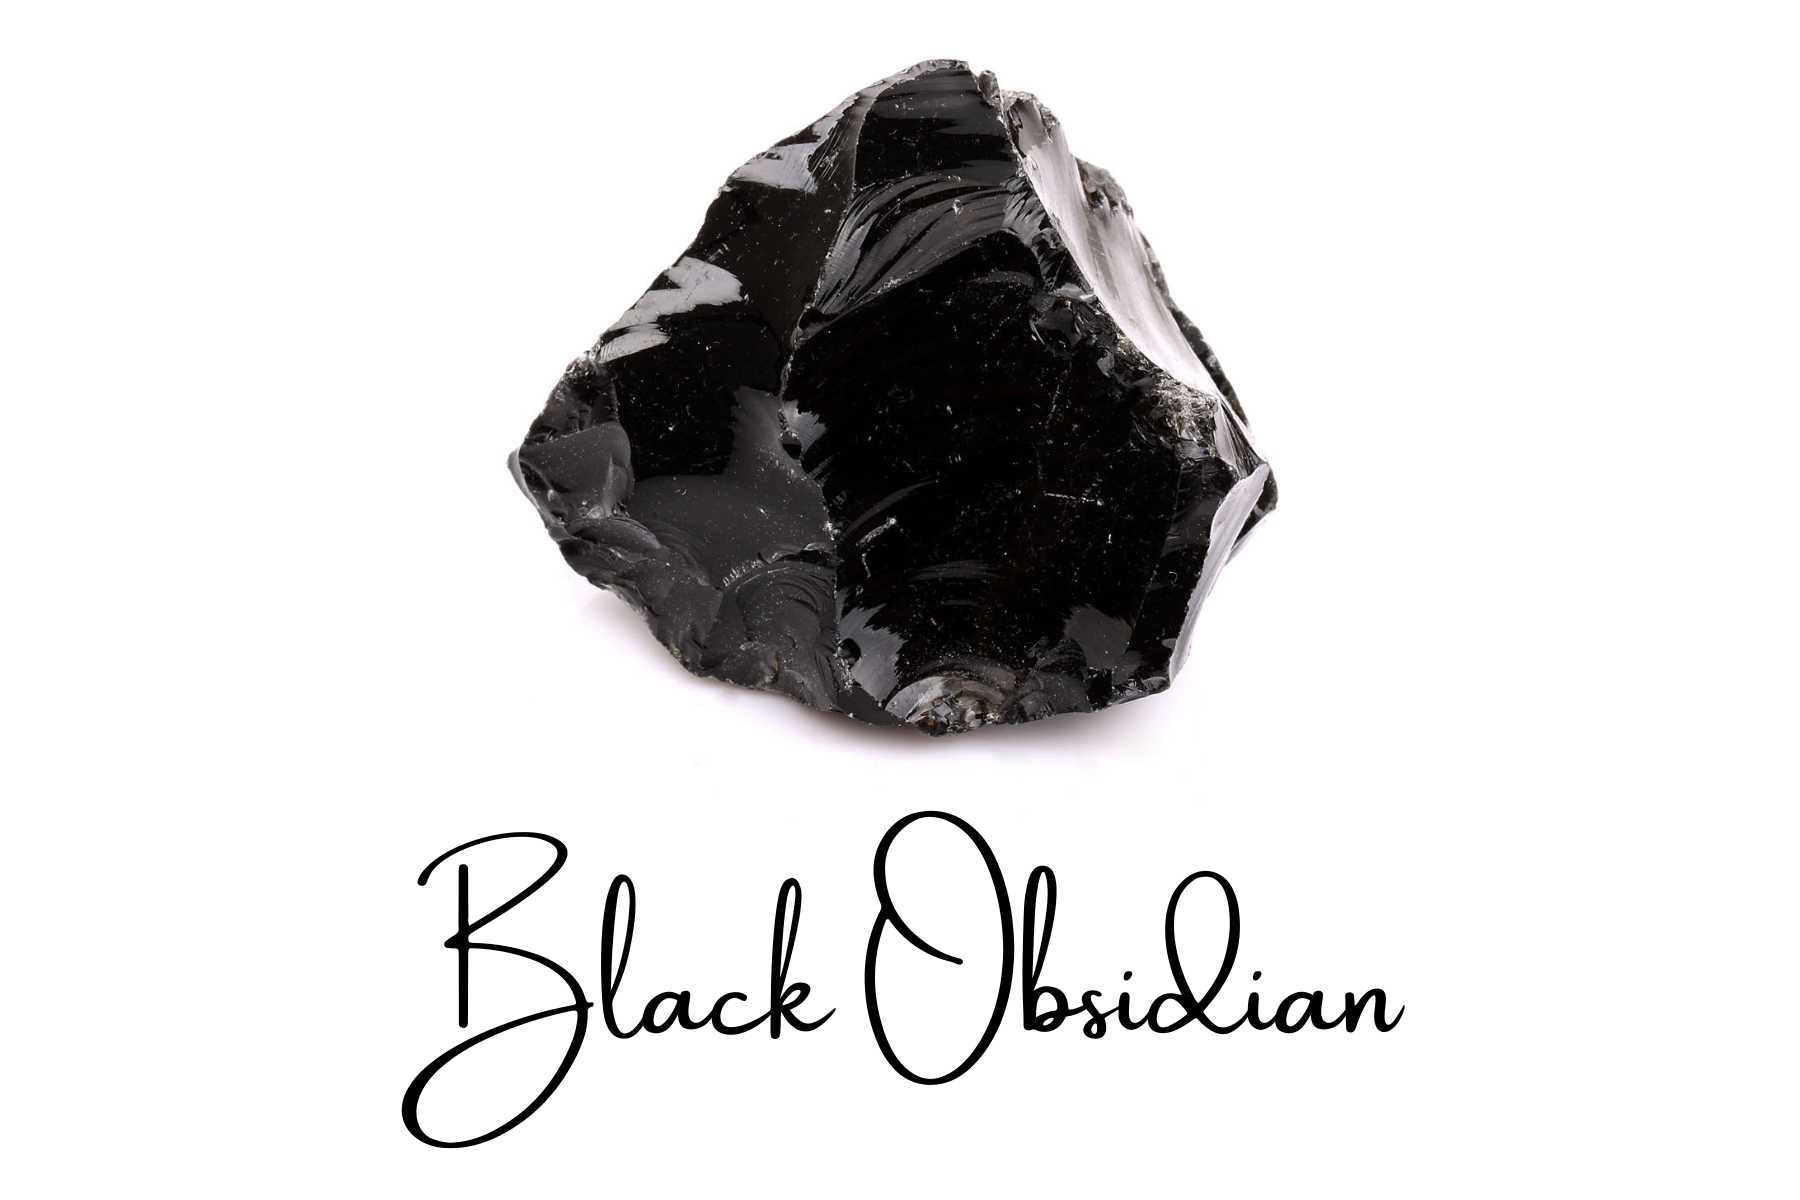 Black obsidian on a form of rock